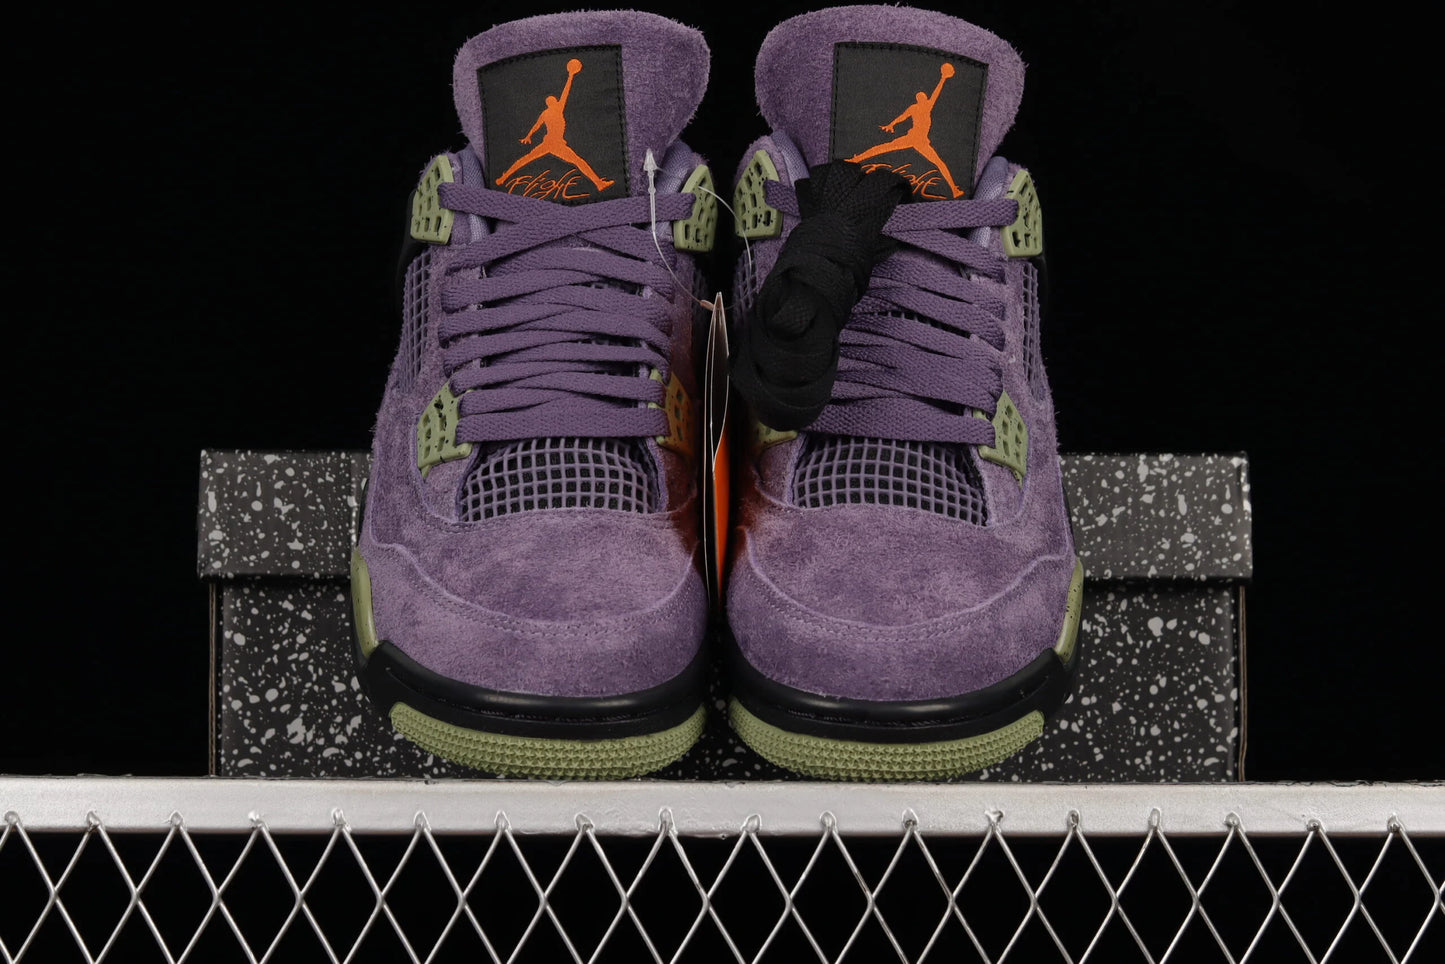 Canyon Purple sneakers